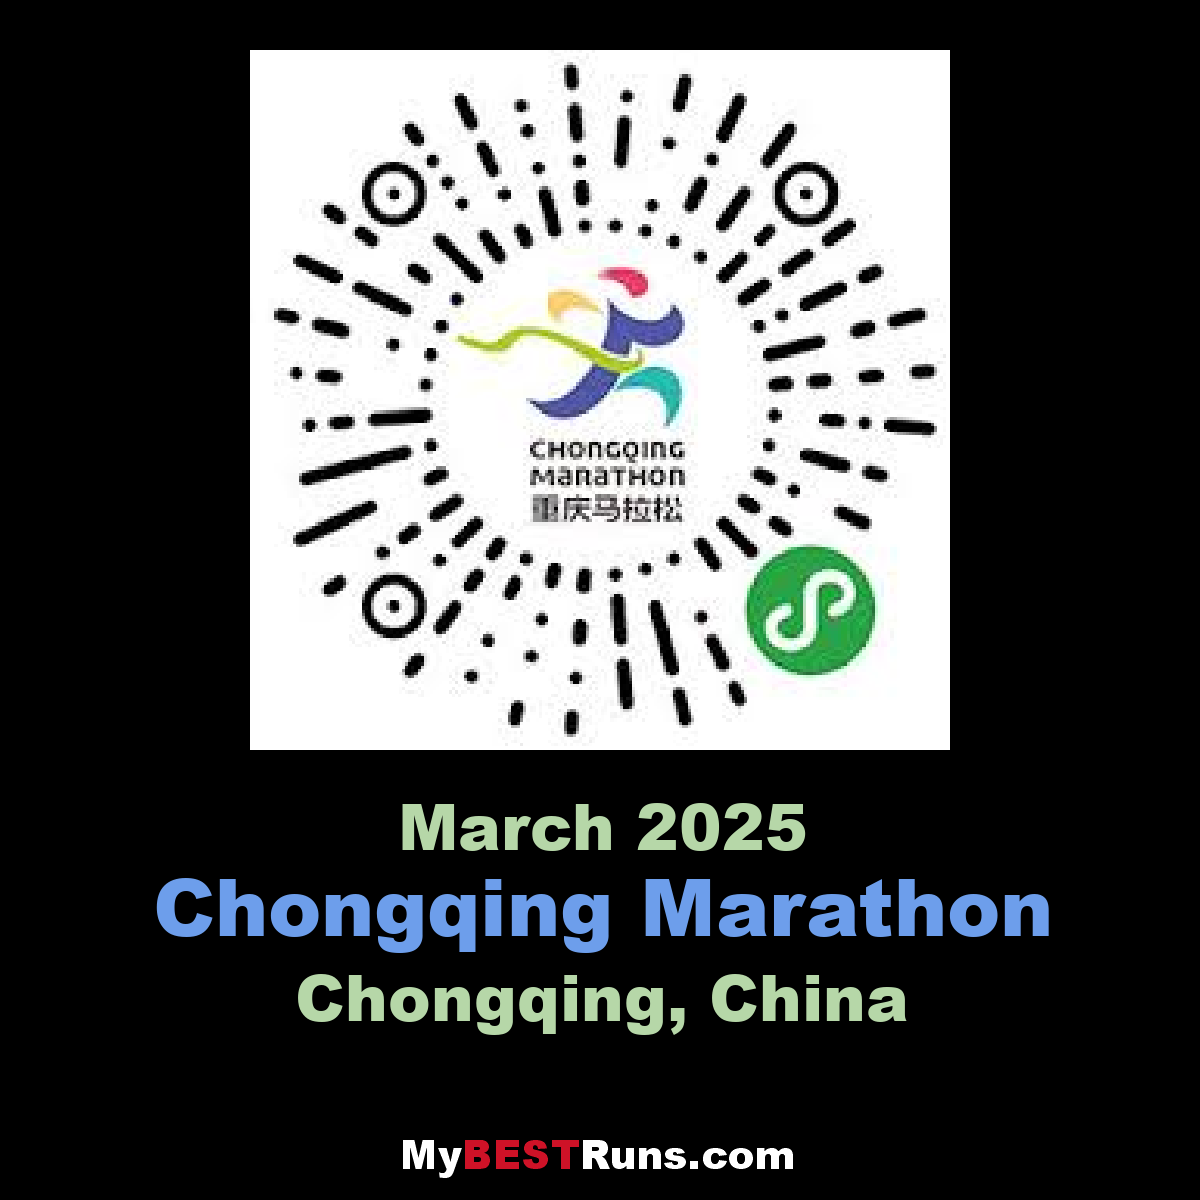 Chongqing International Marathon